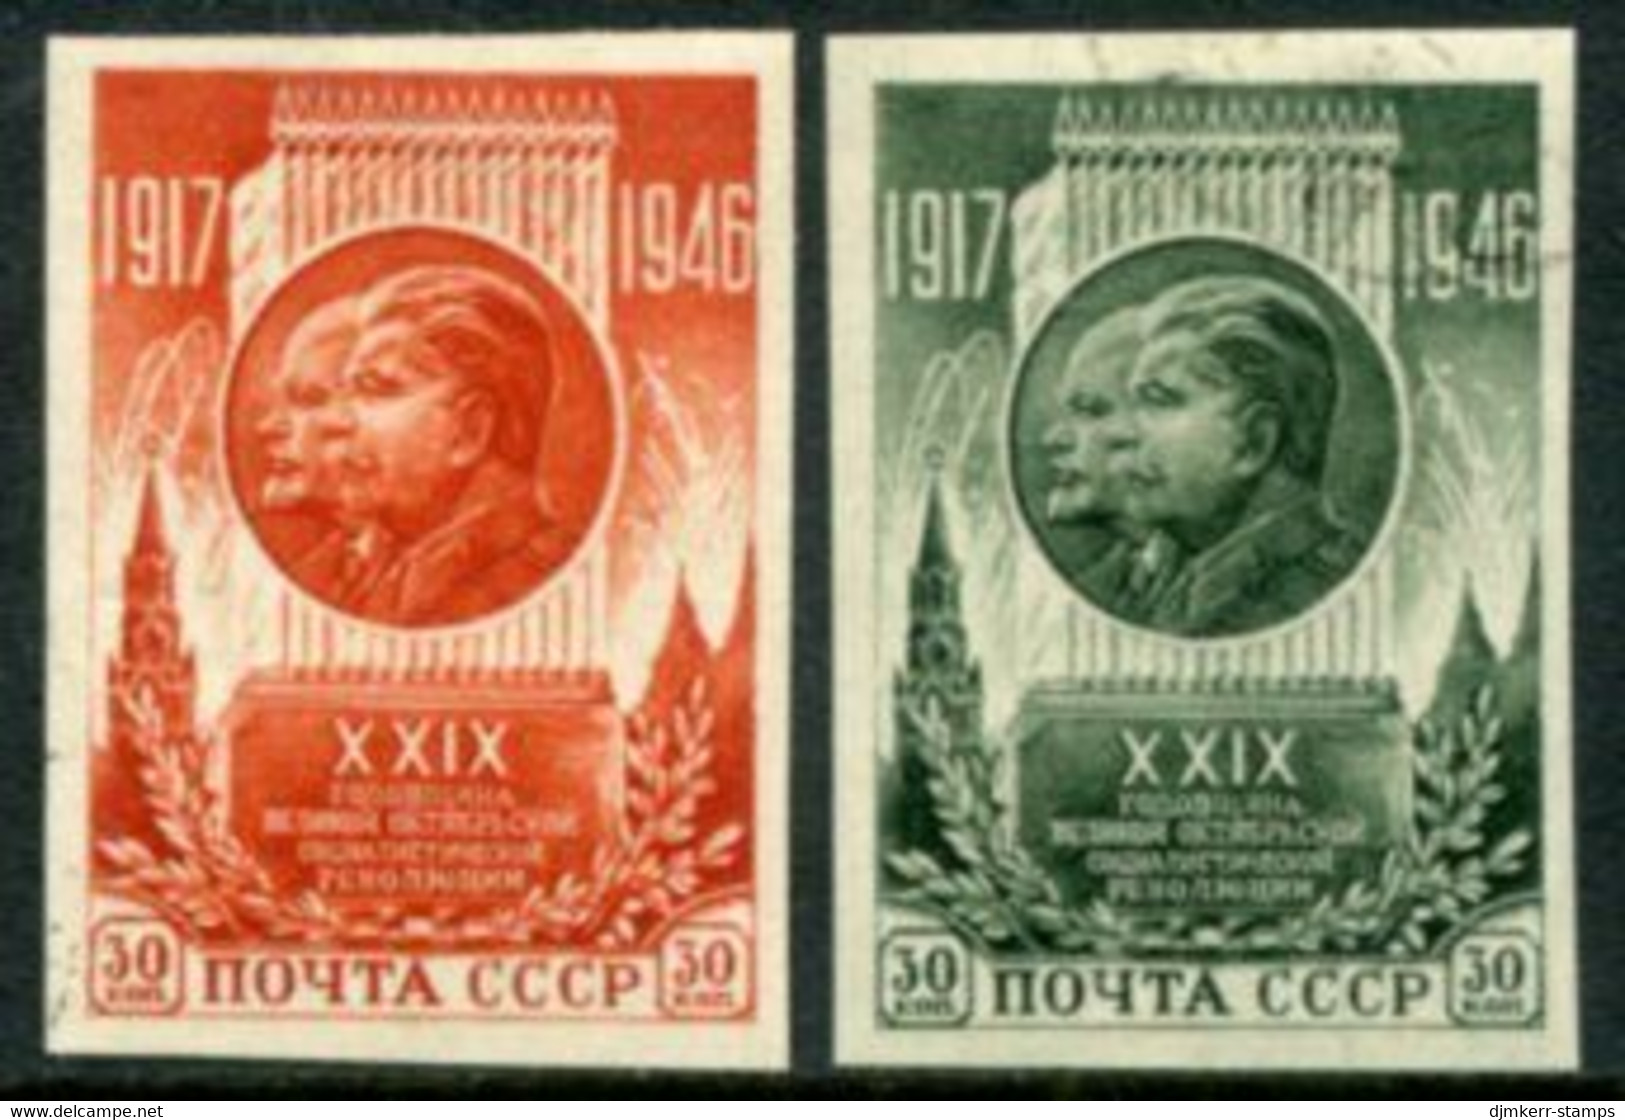 SOVIET UNION 1946 October Revolution Imperforate LHM / *  Michel 1074-75B - Ongebruikt